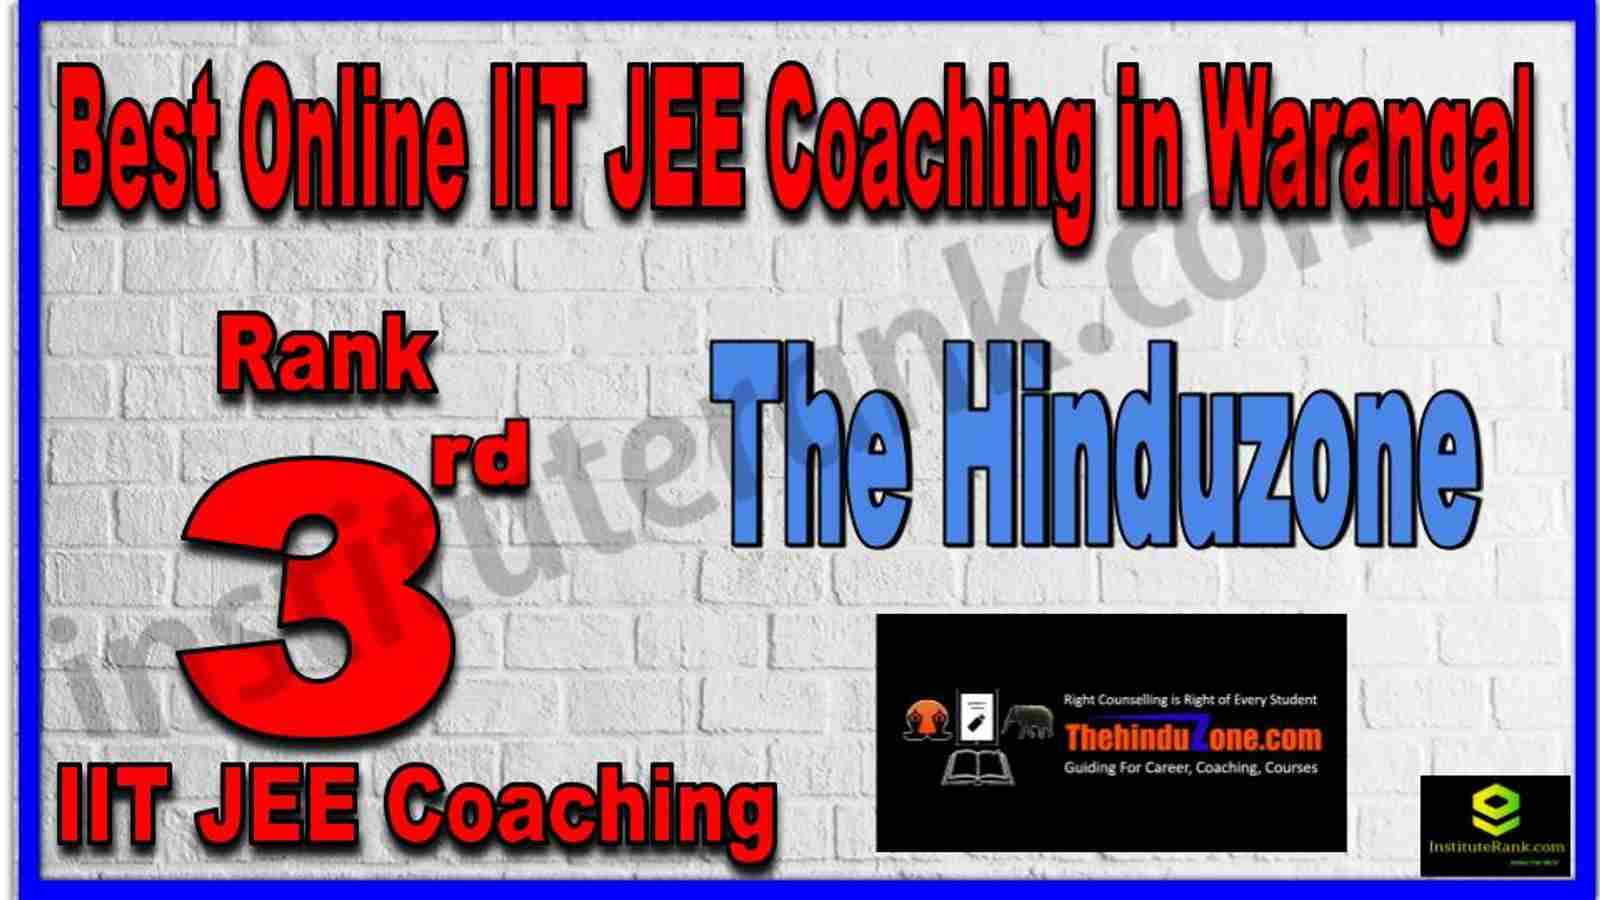 Rank 3rd Best Online IIT JEE Coaching in Warangal